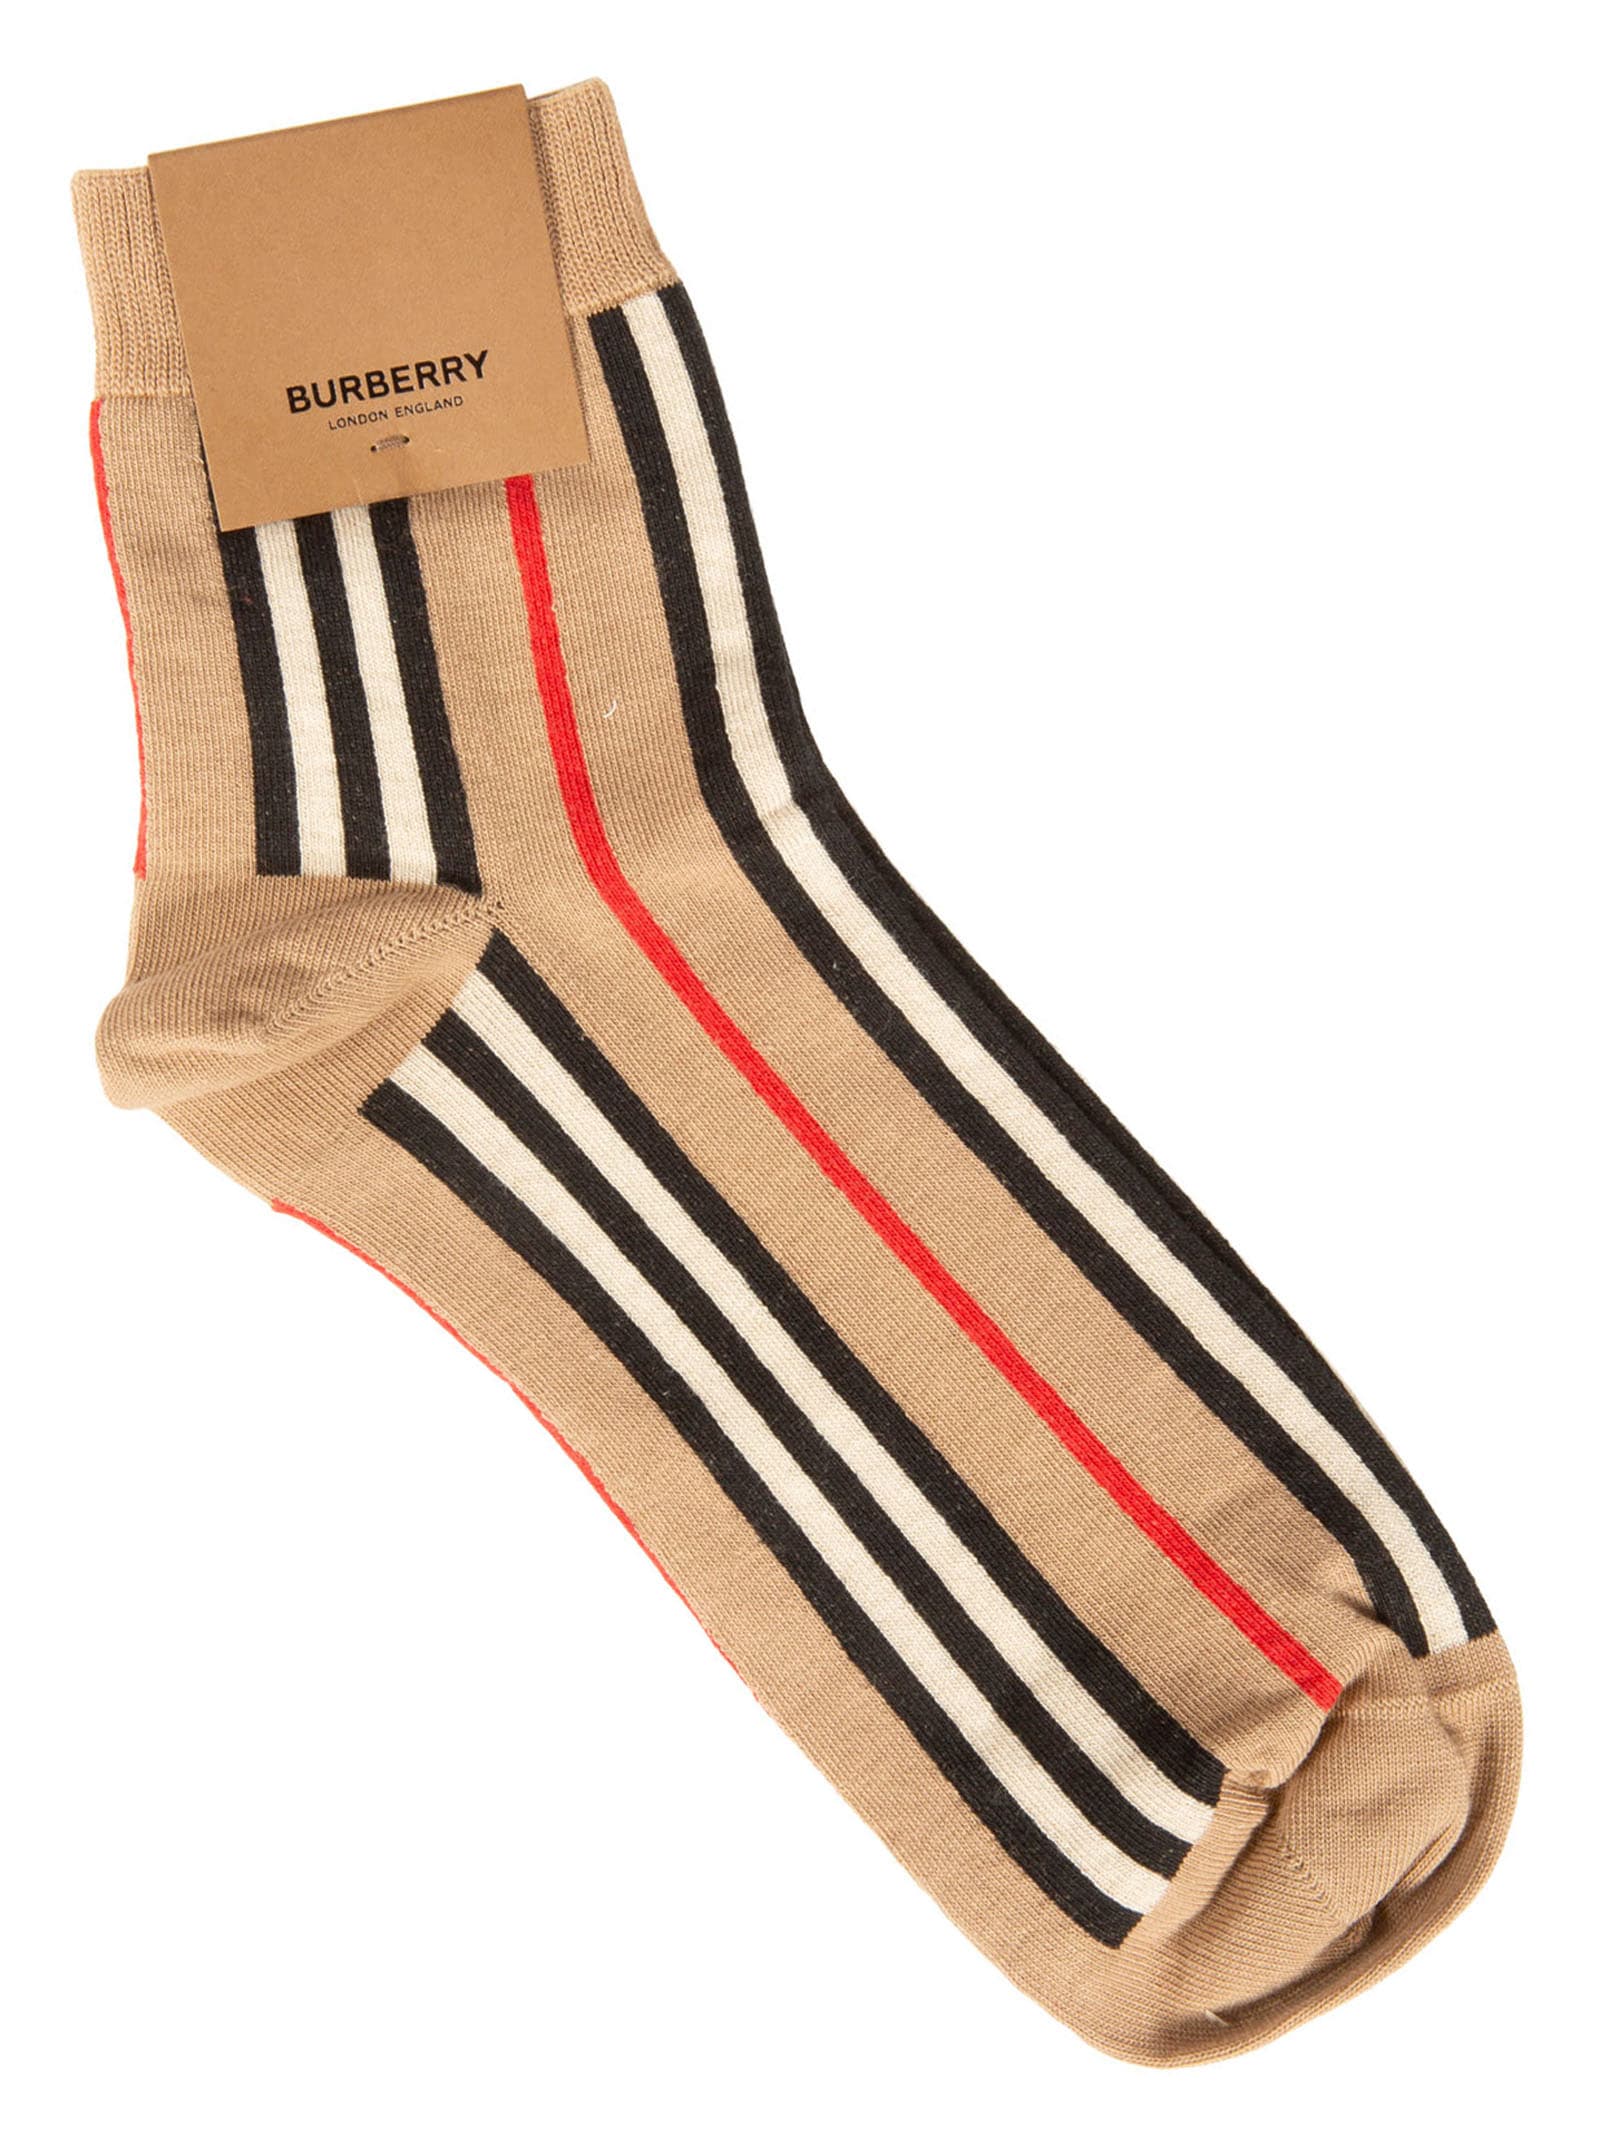 Burberry Stripe Socks